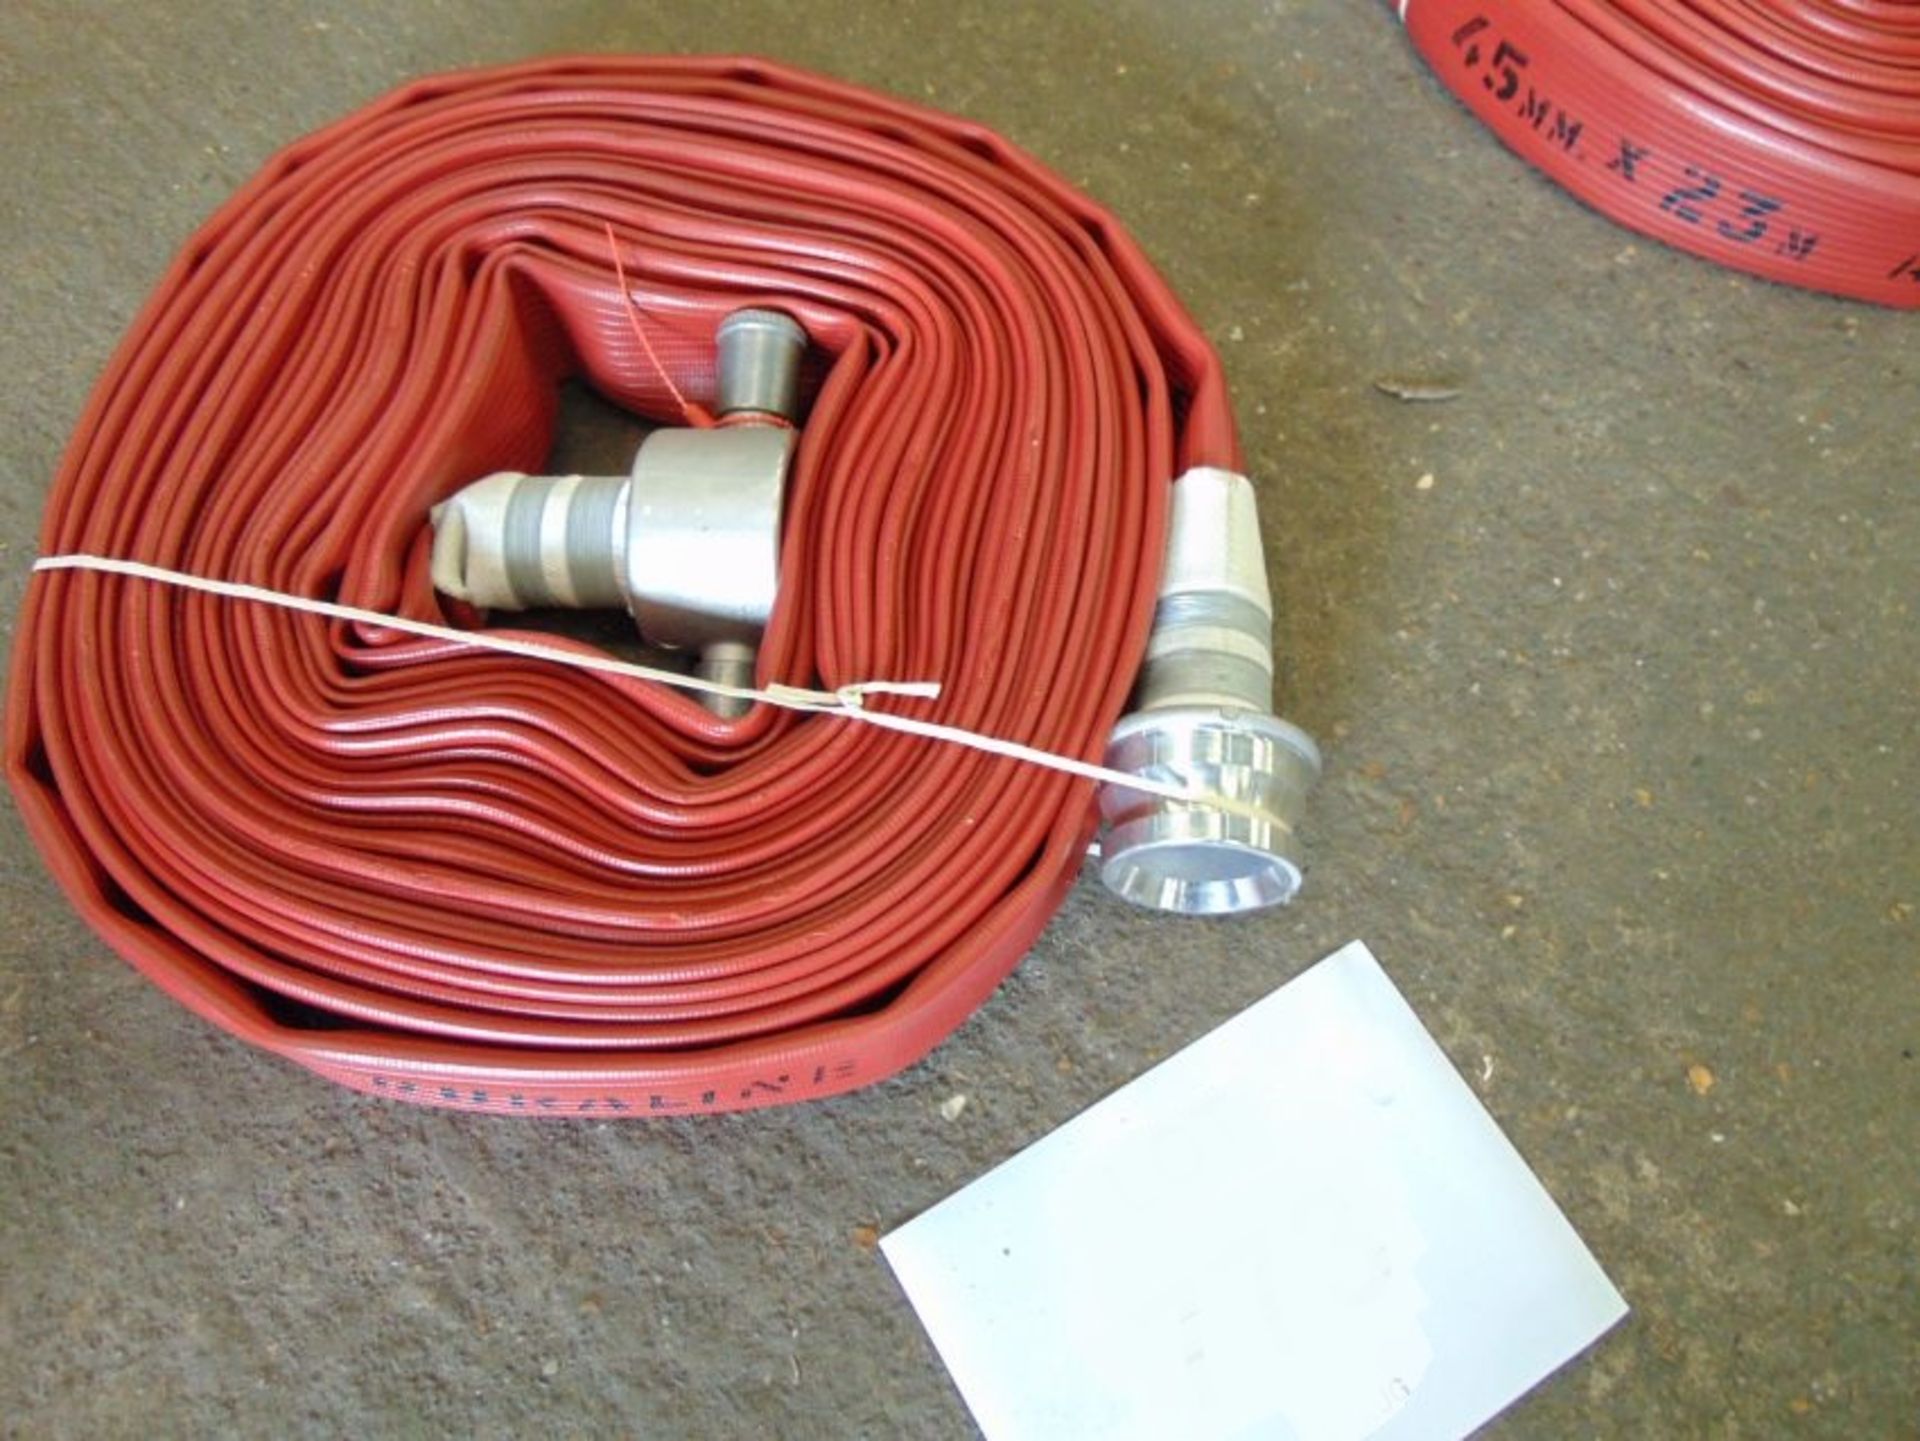 Unissued Angus Duraline 45MM x 23M Layflat hose c/w fittings - Image 3 of 3